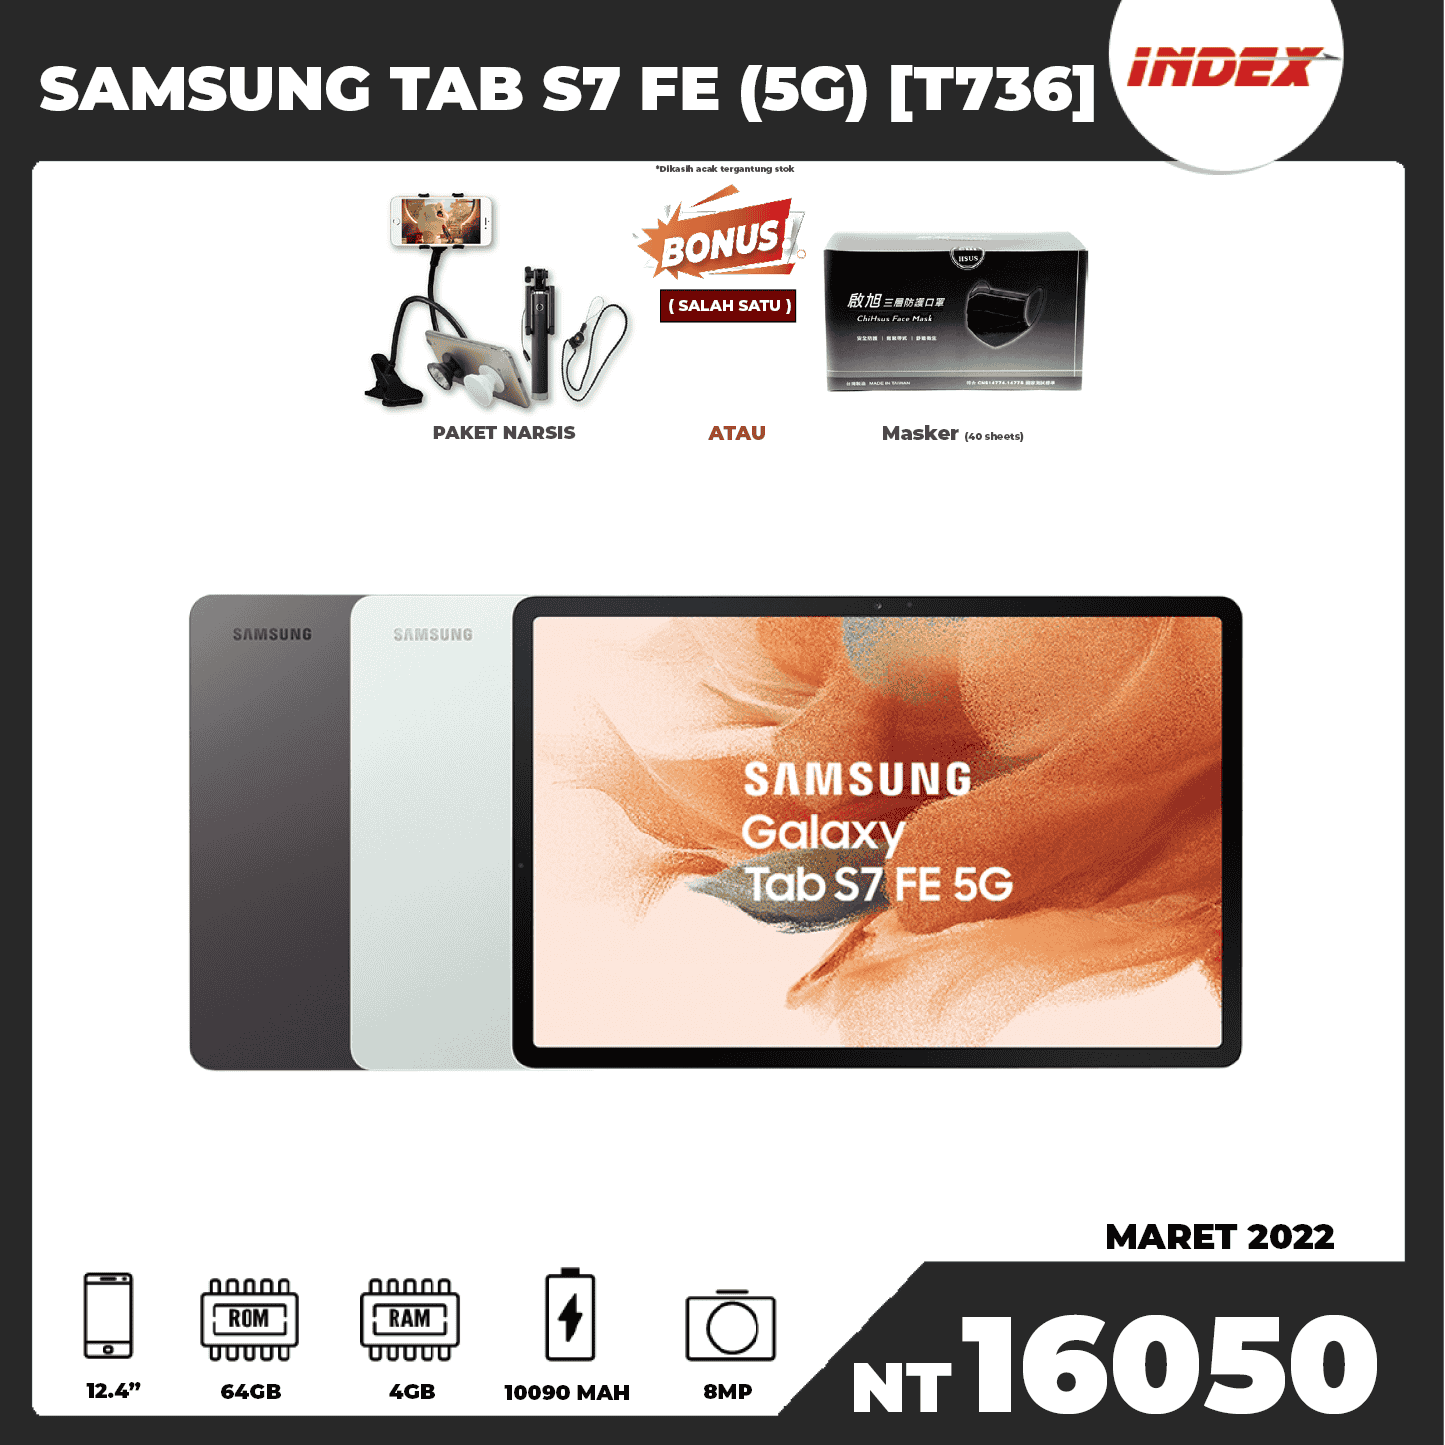 SAMSUNG TAB S7 FE (5G) [T736]